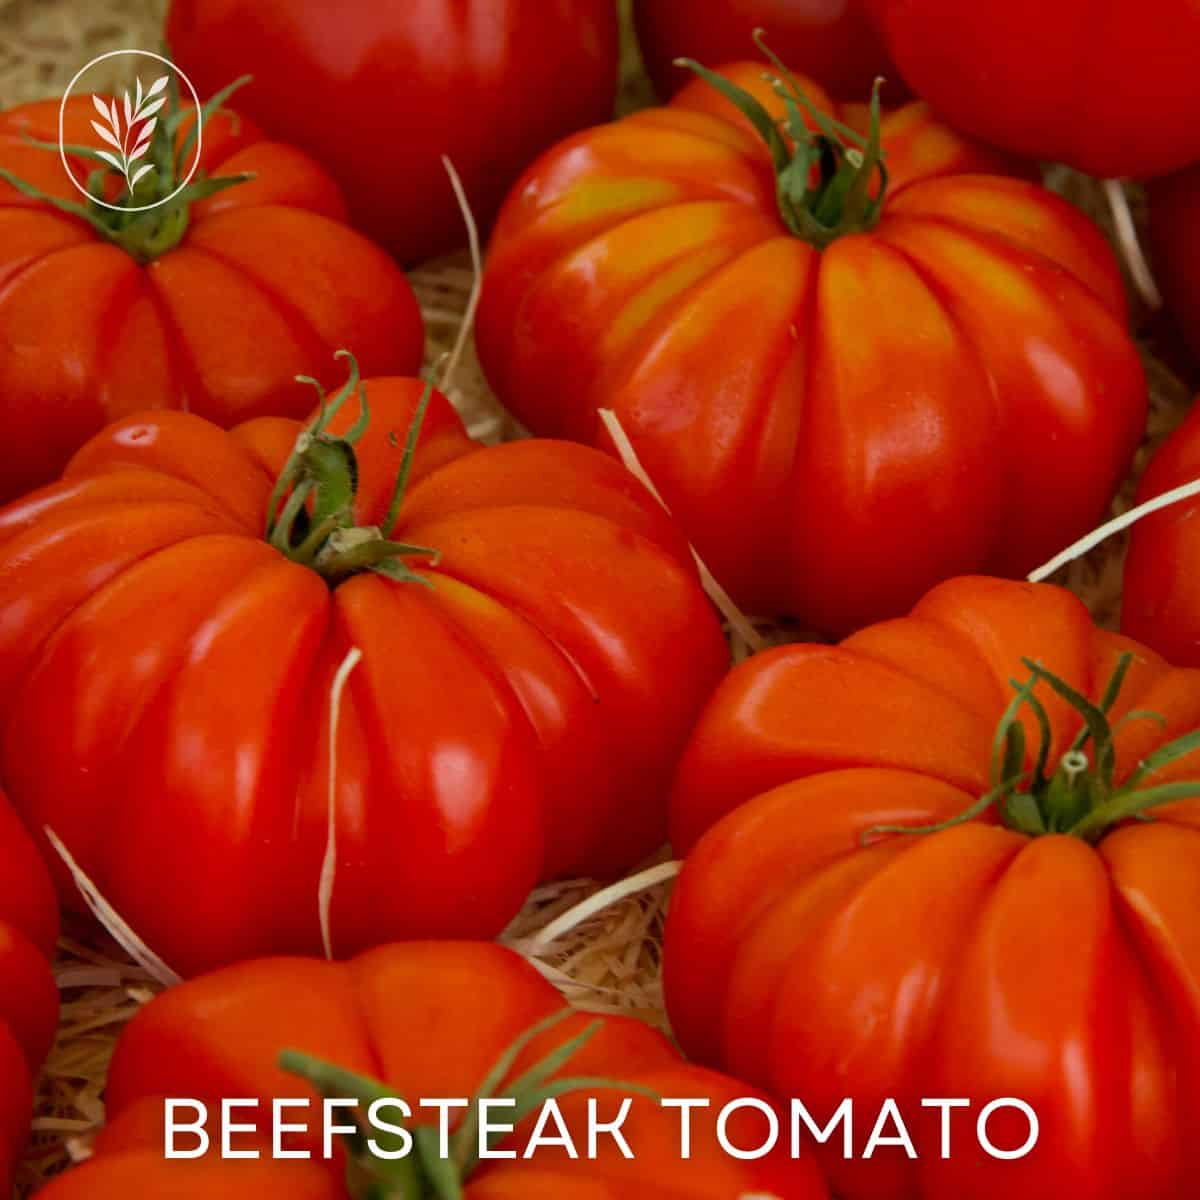 Beefsteak tomato via @home4theharvest